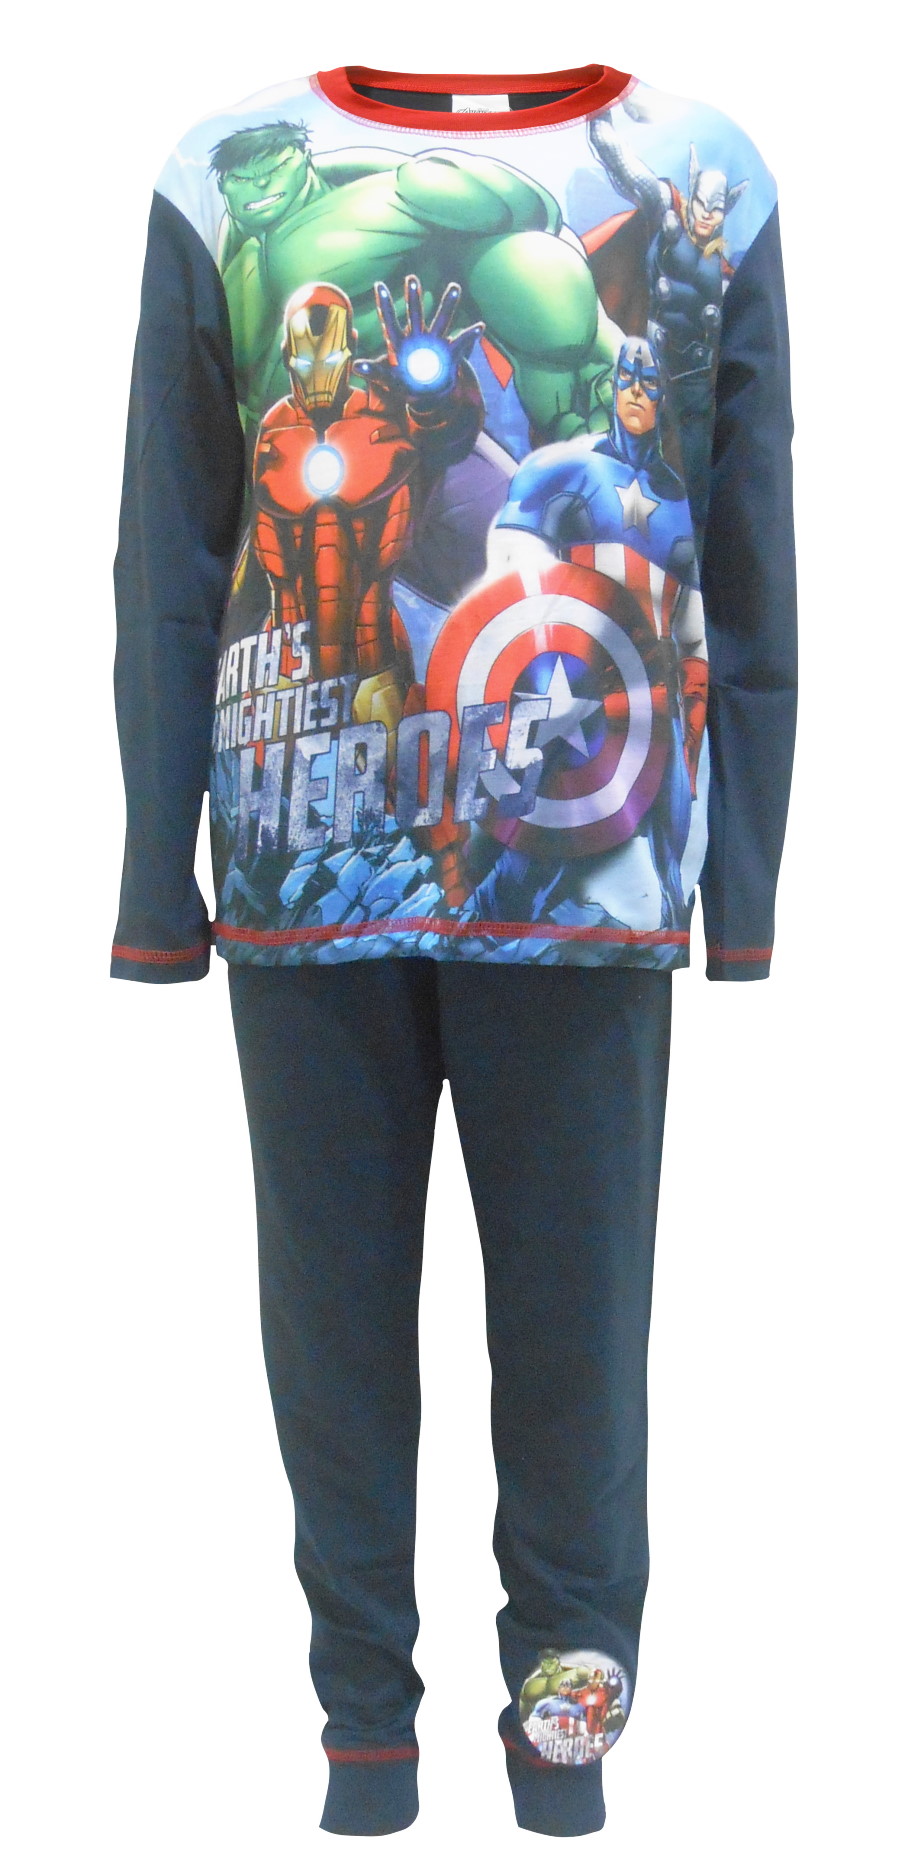 MArvel Avengers Pyjamas PB304 (2).JPG  by Thingimijigs